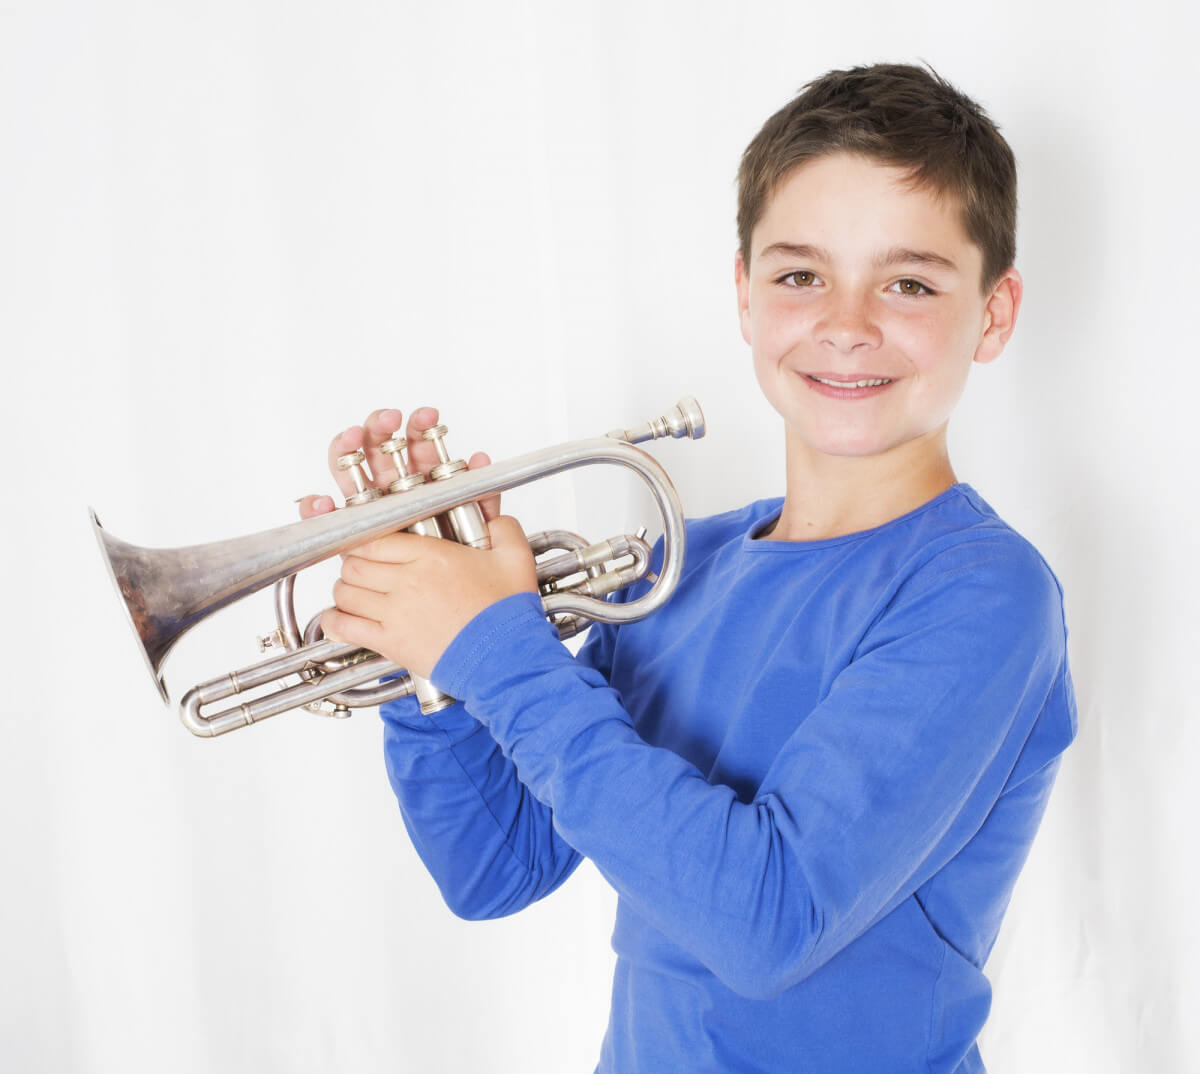 Online Trumpet Course Information